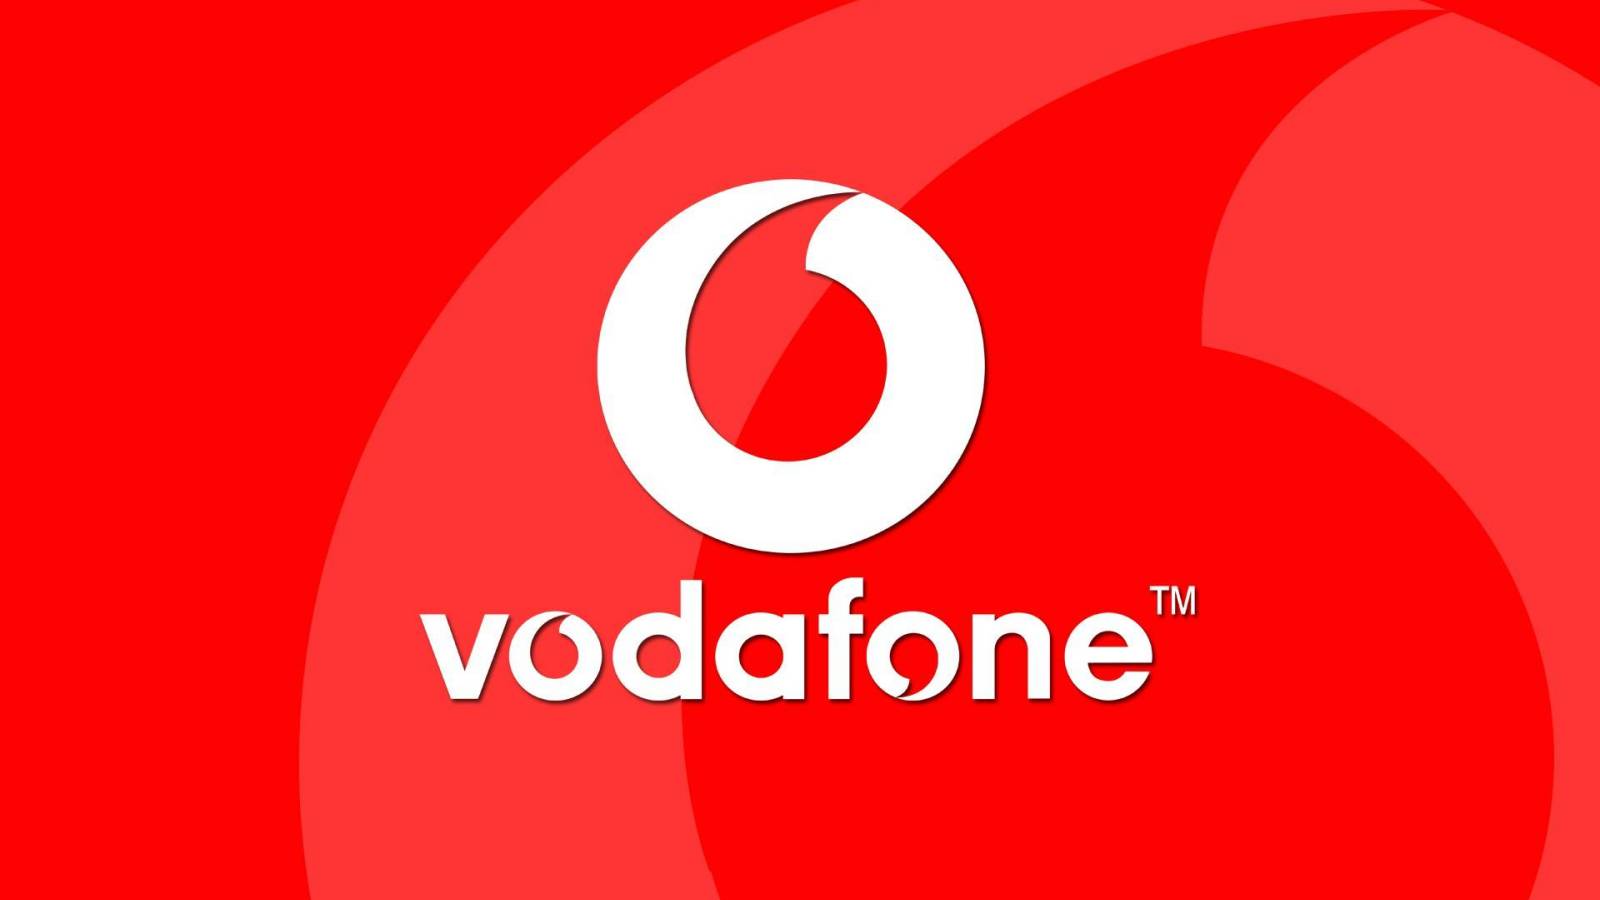 Vodafone zombi